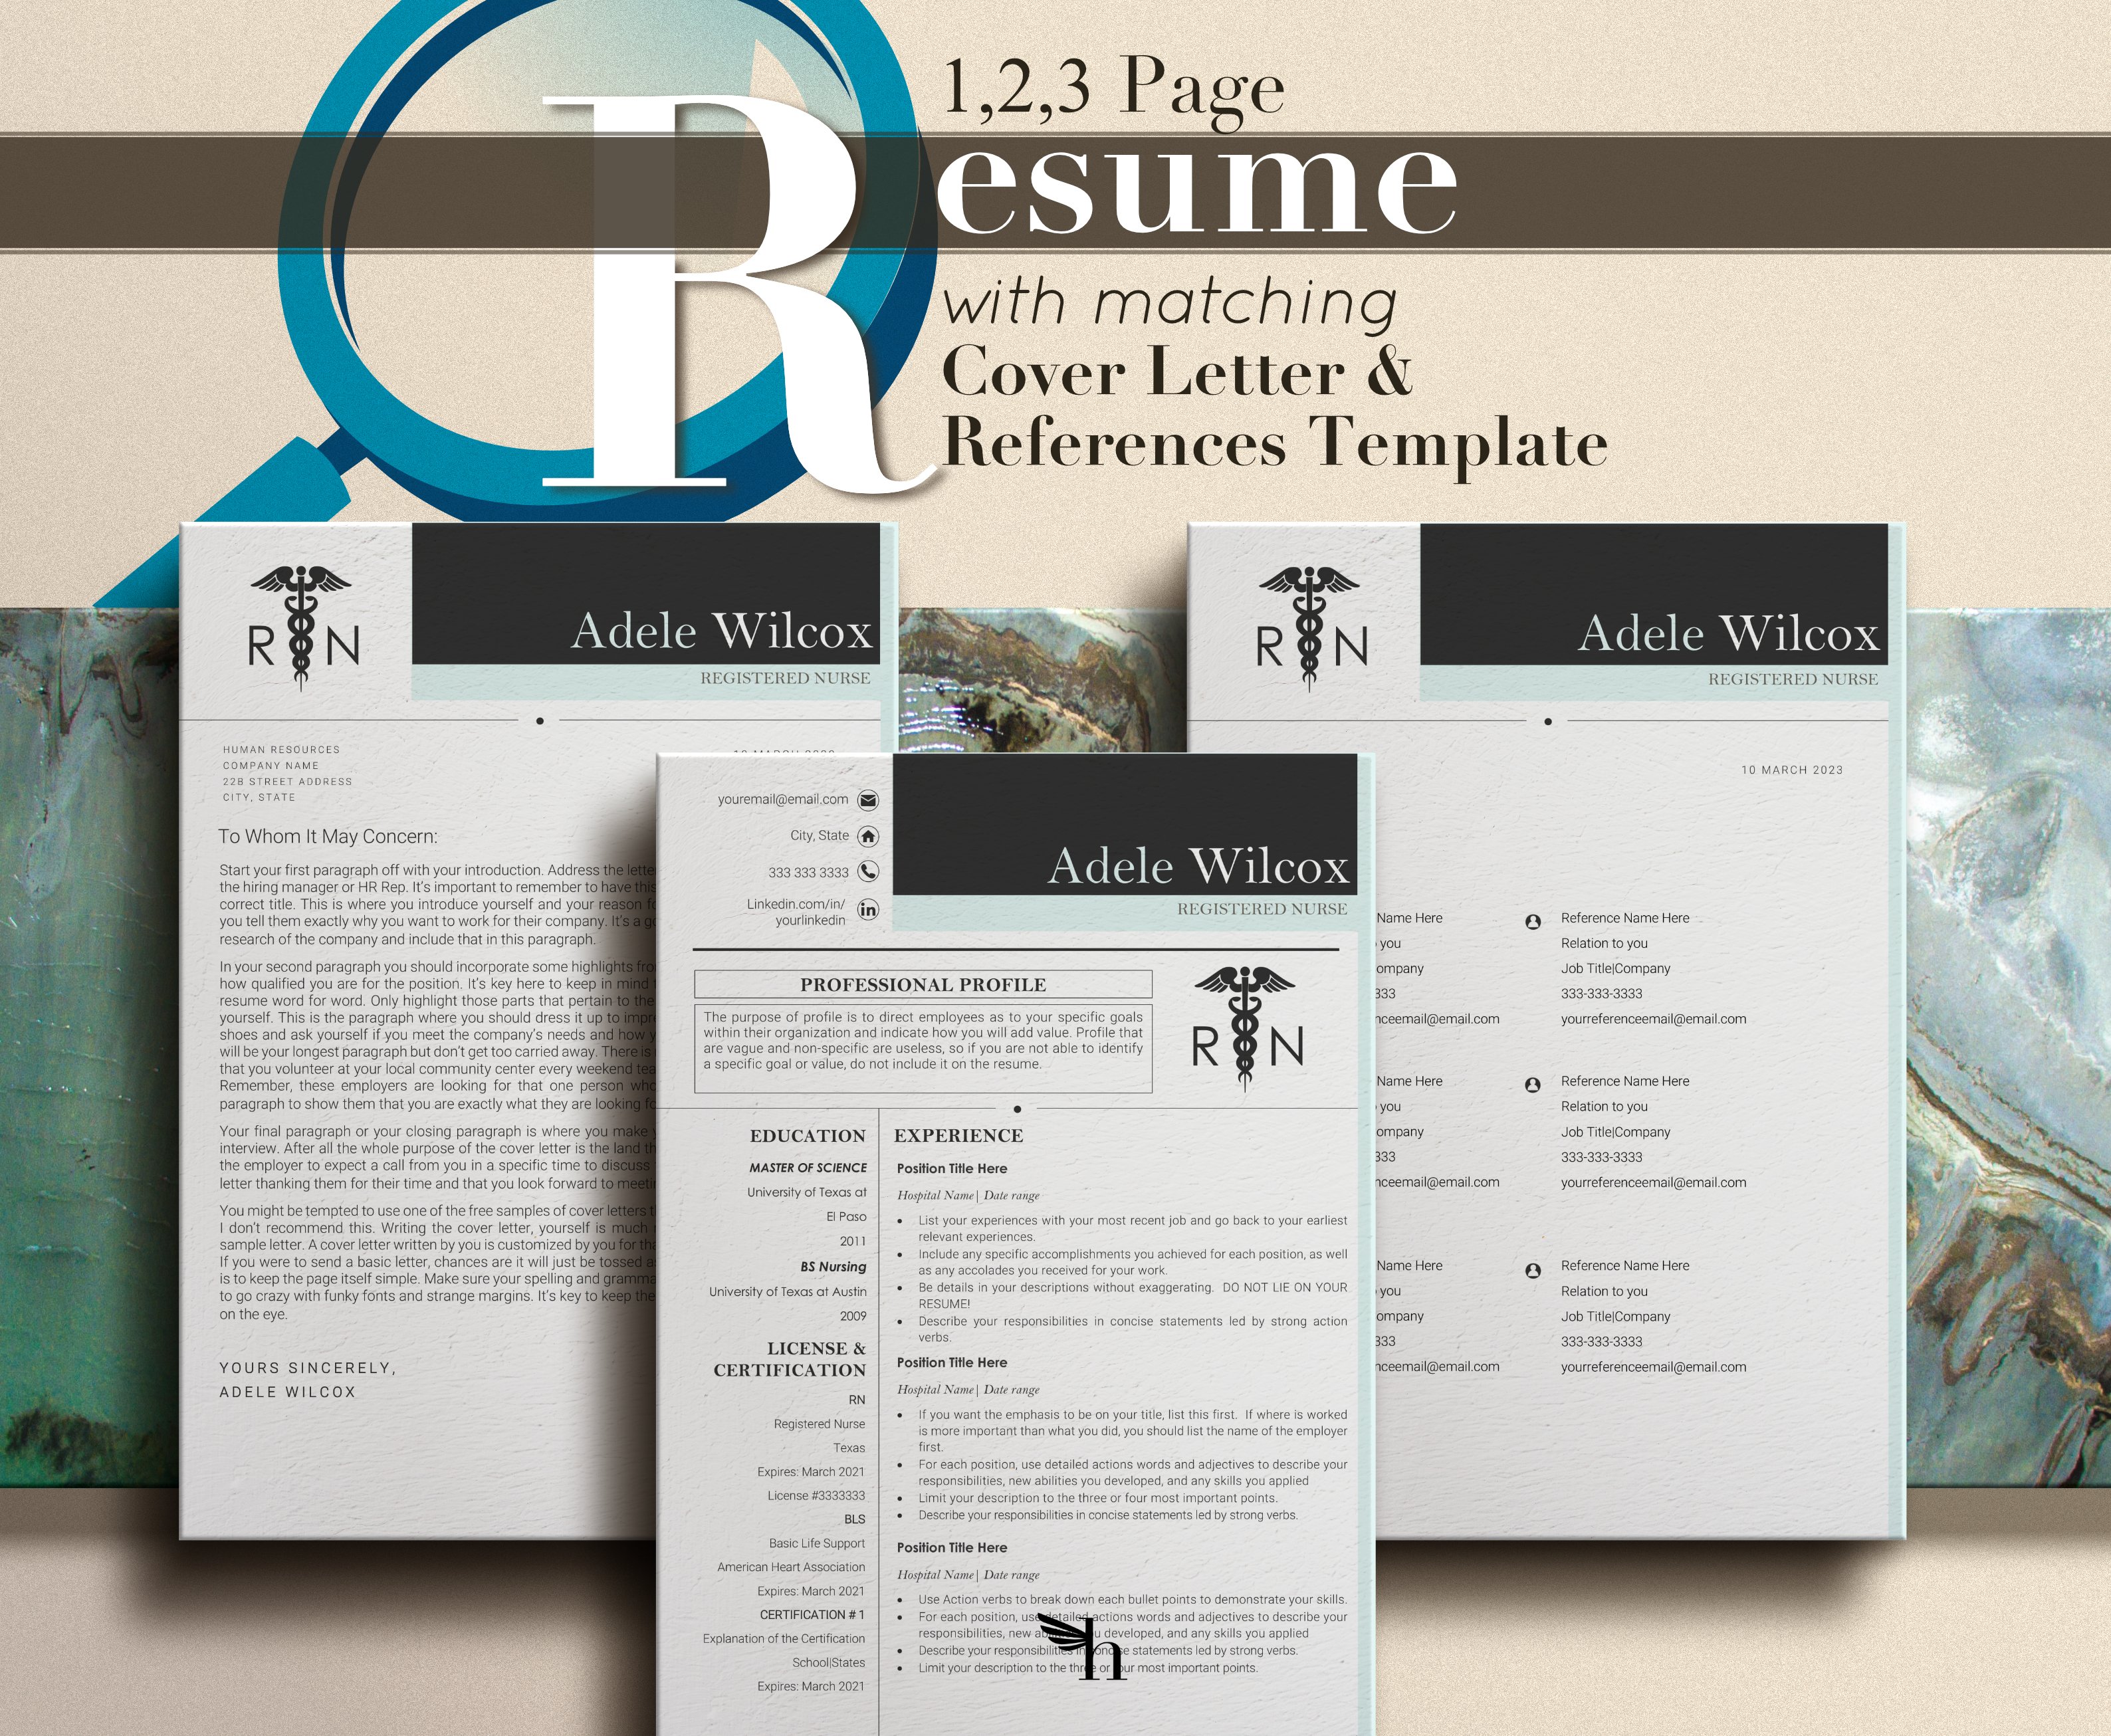 4 3 page resume template lebenslauf vorlage resume template with cover letter resume copy copy copy copy copy 3 761